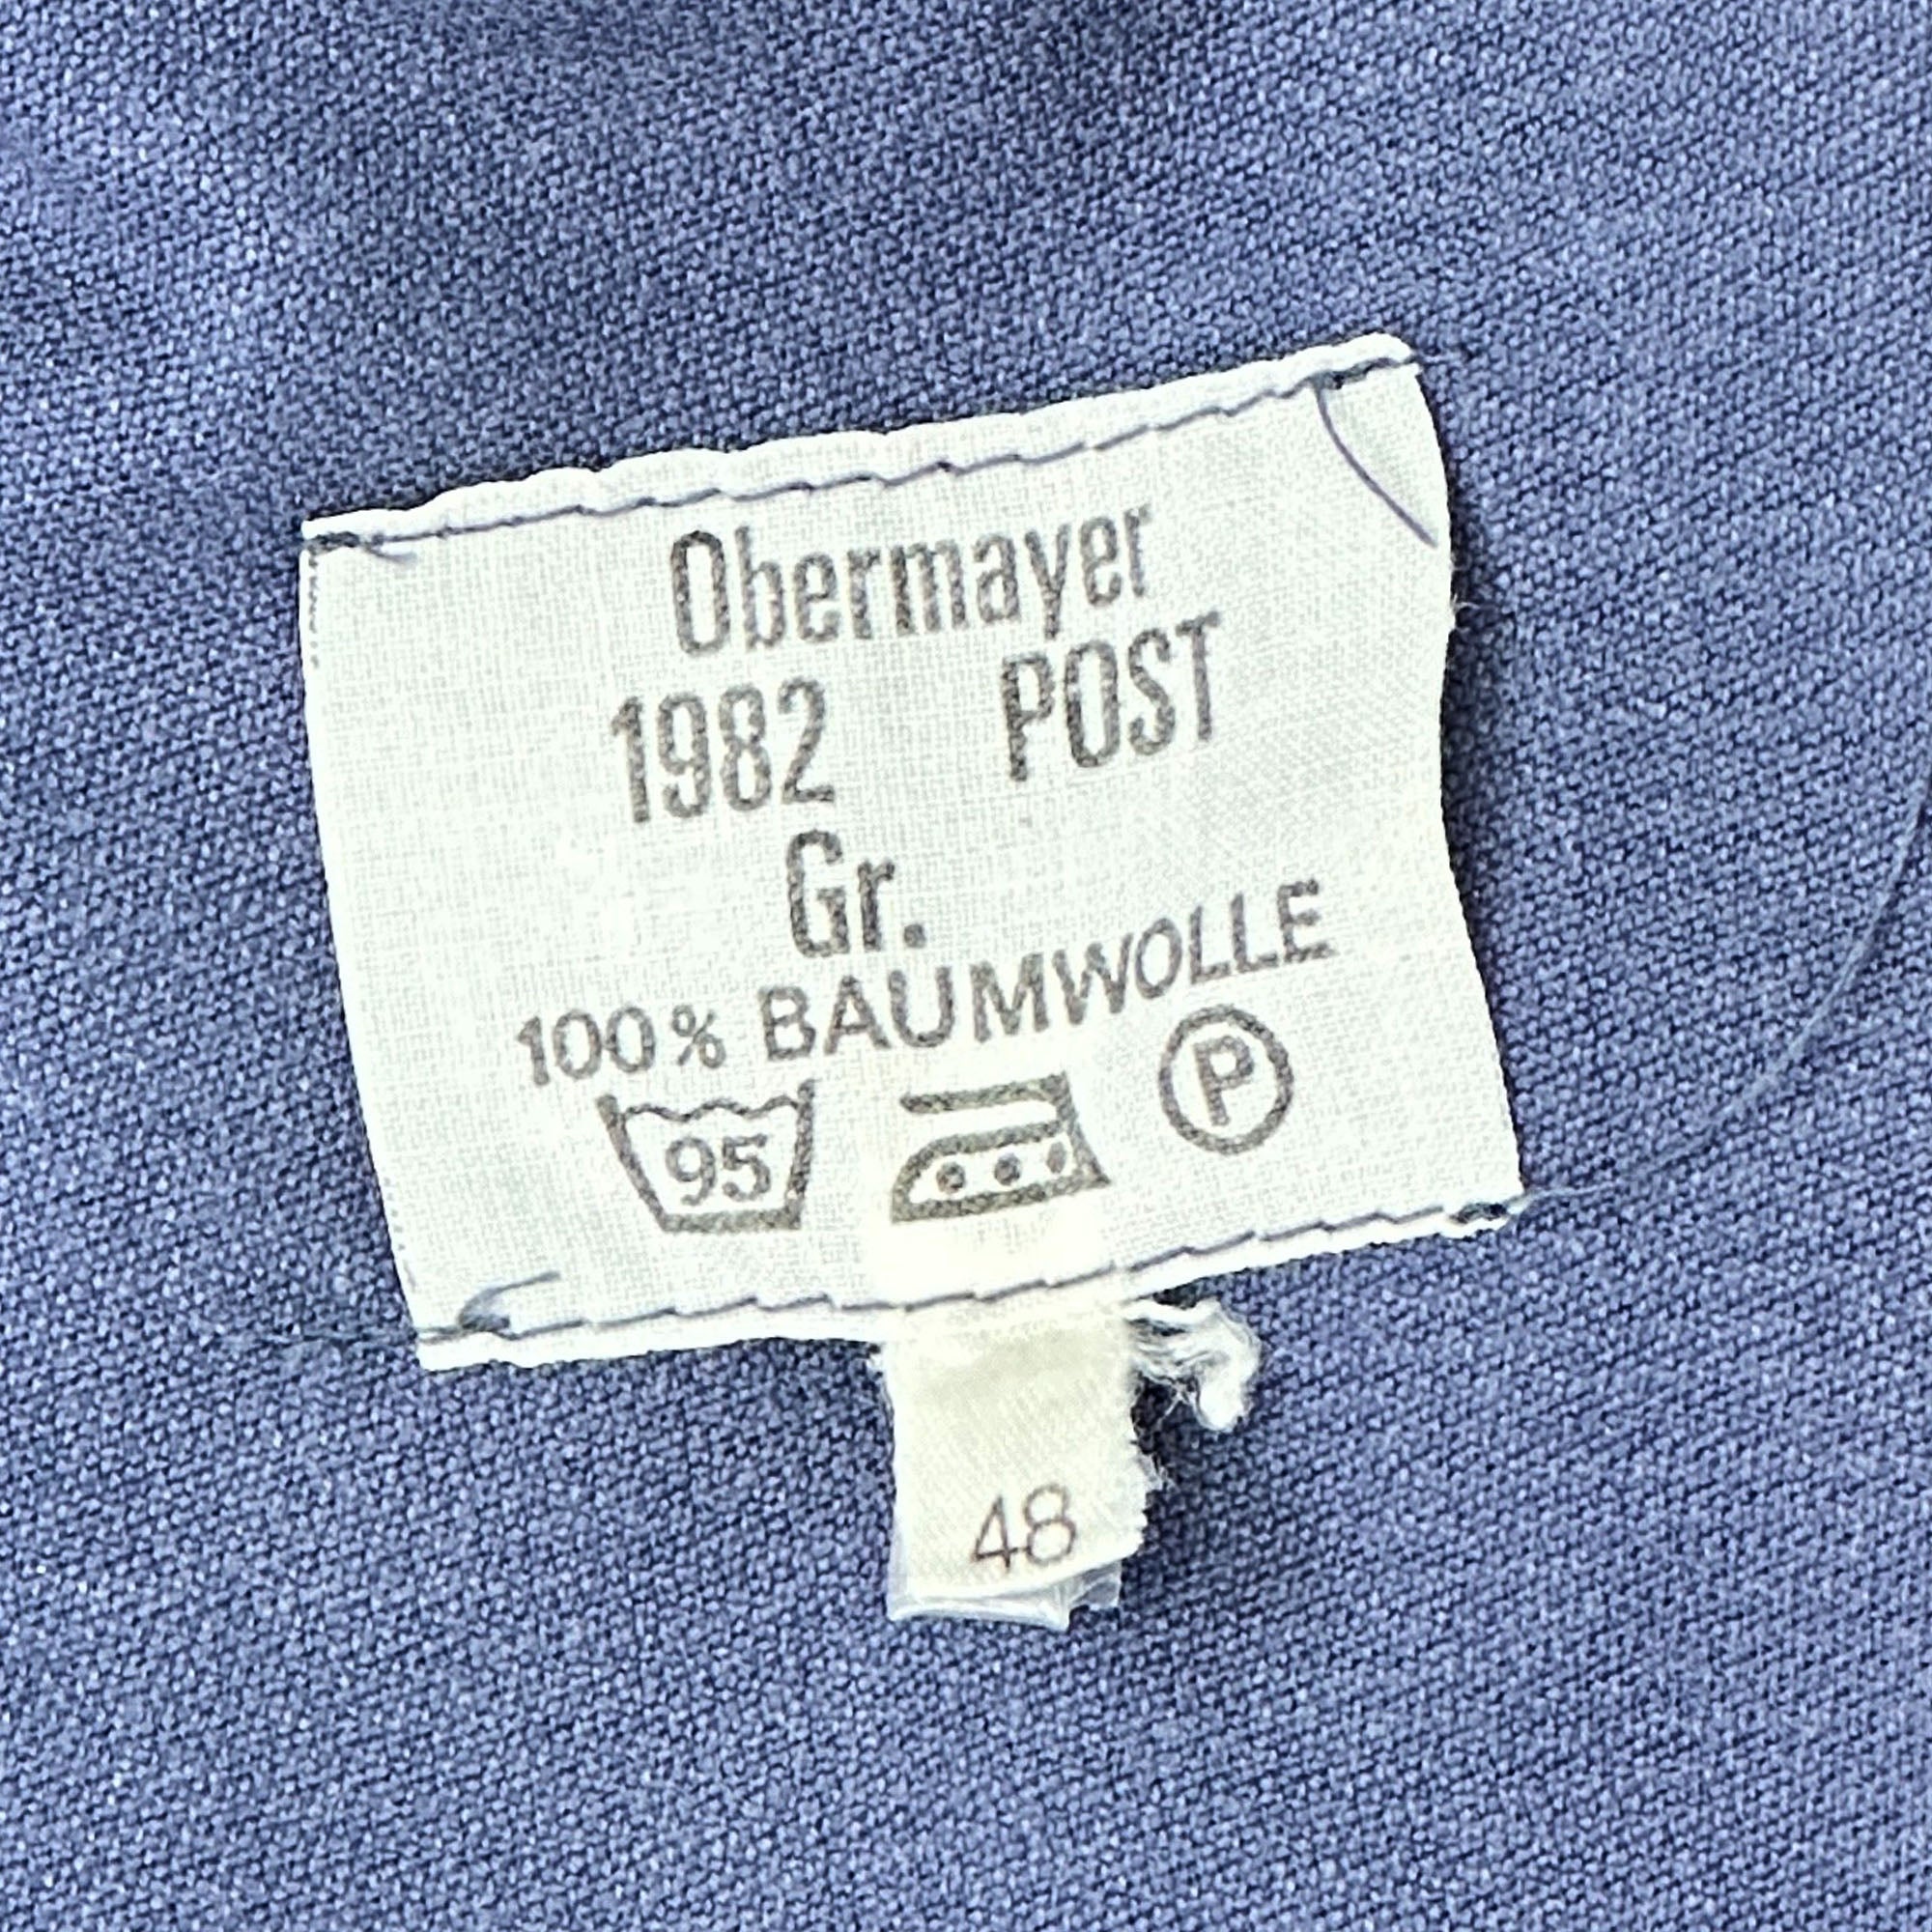 Vintage 1982 German Postal Work Shirt - Men's Small-5